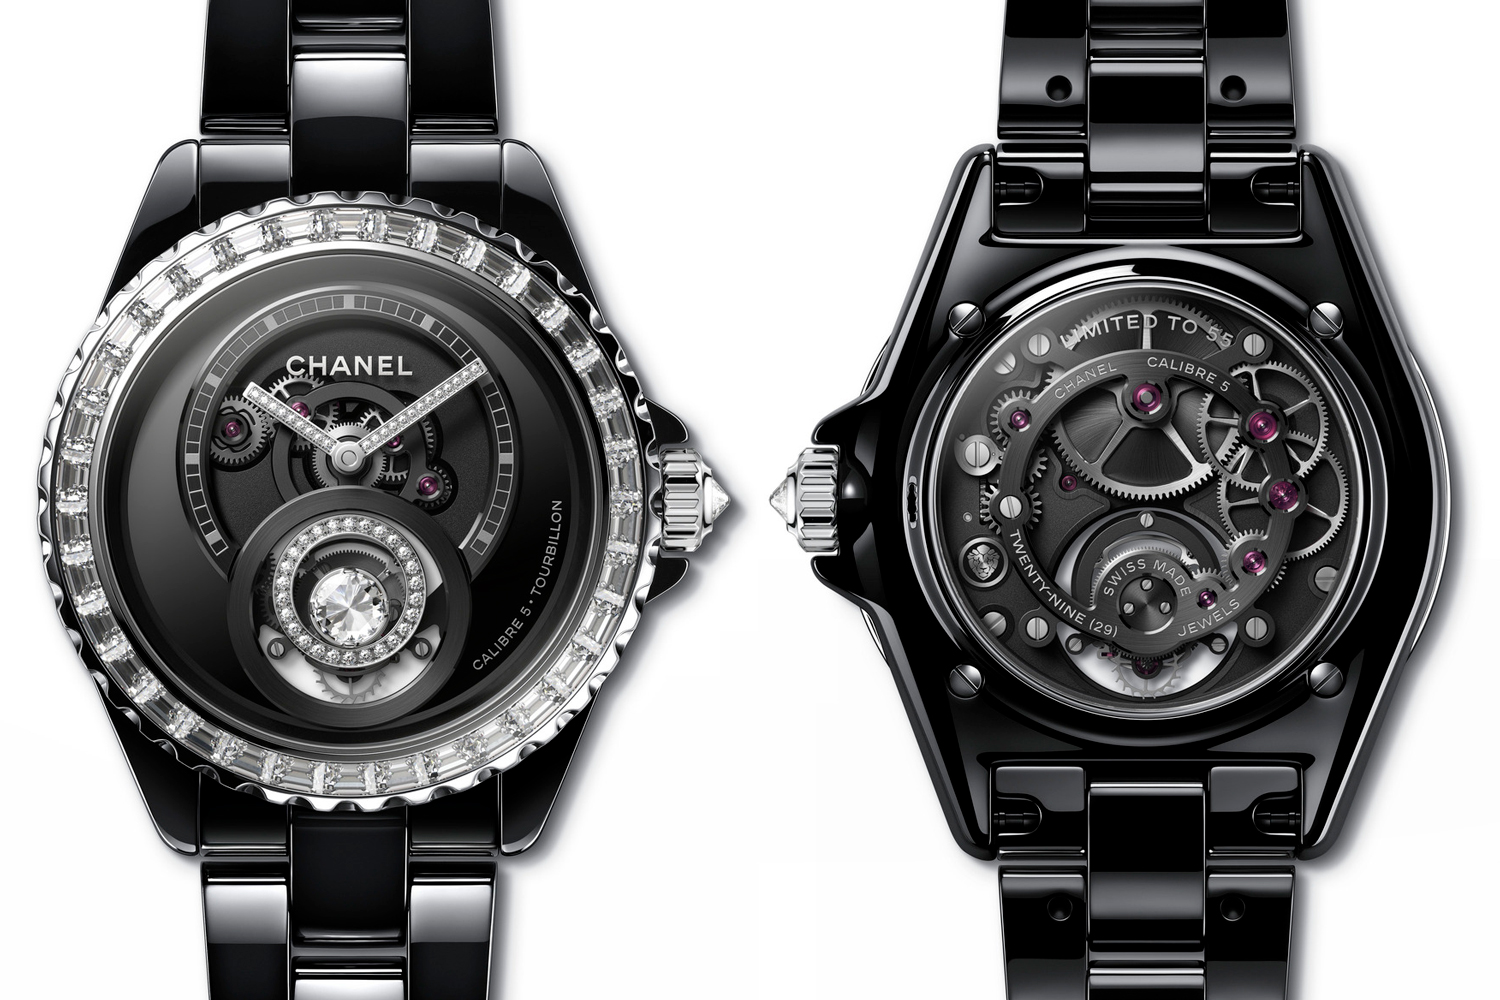 Introducing the Chanel J12 Diamond Tourbillon and the J12 Ca - Revolution